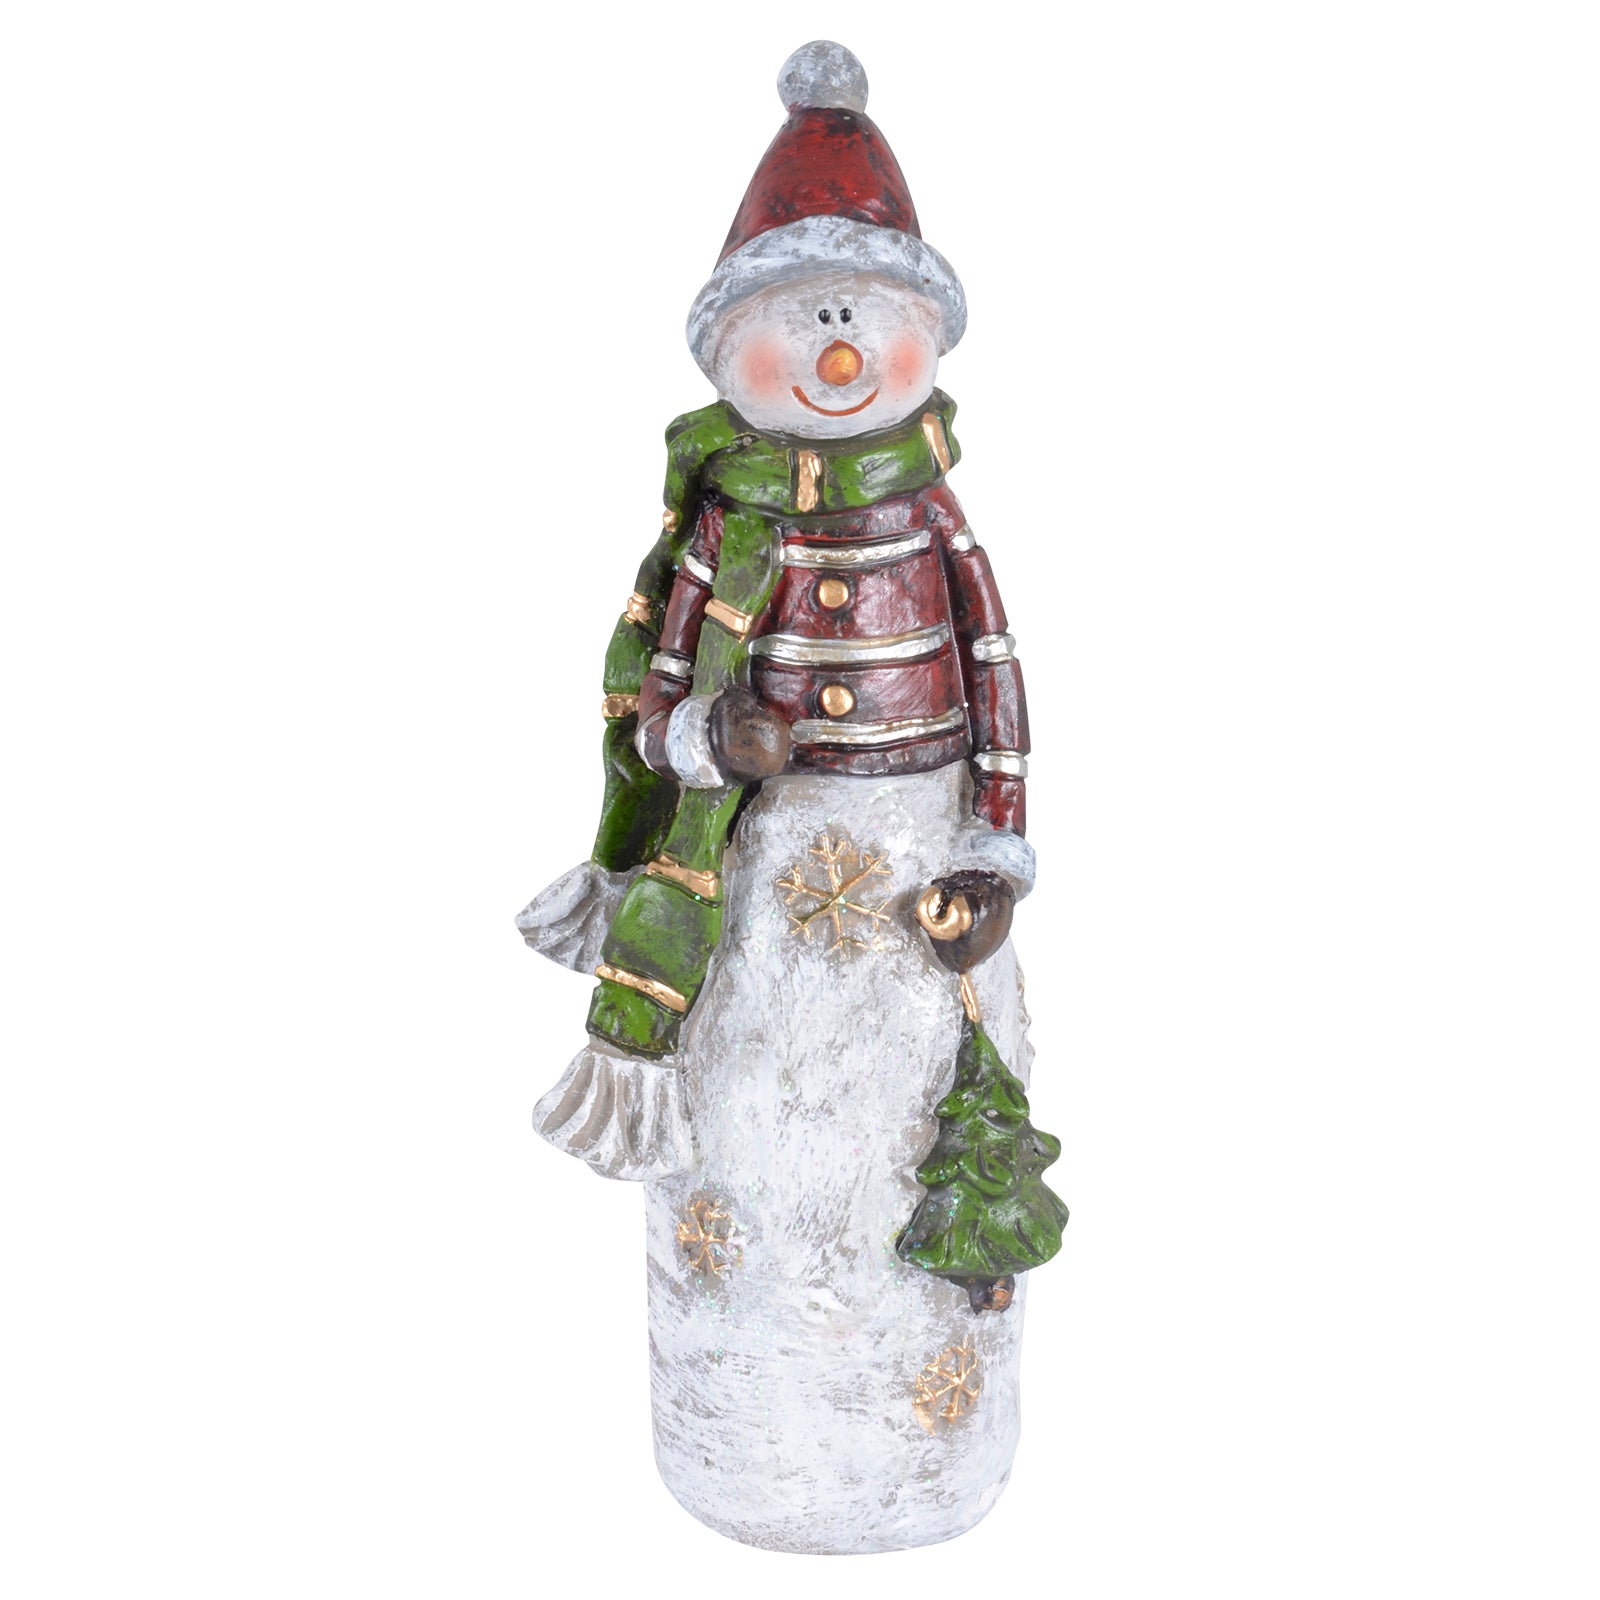 Mr Crimbo Snowman Ornament Resin Christmas Decoration - MrCrimbo.co.uk -XS4307 - 17cm -christmas decoration